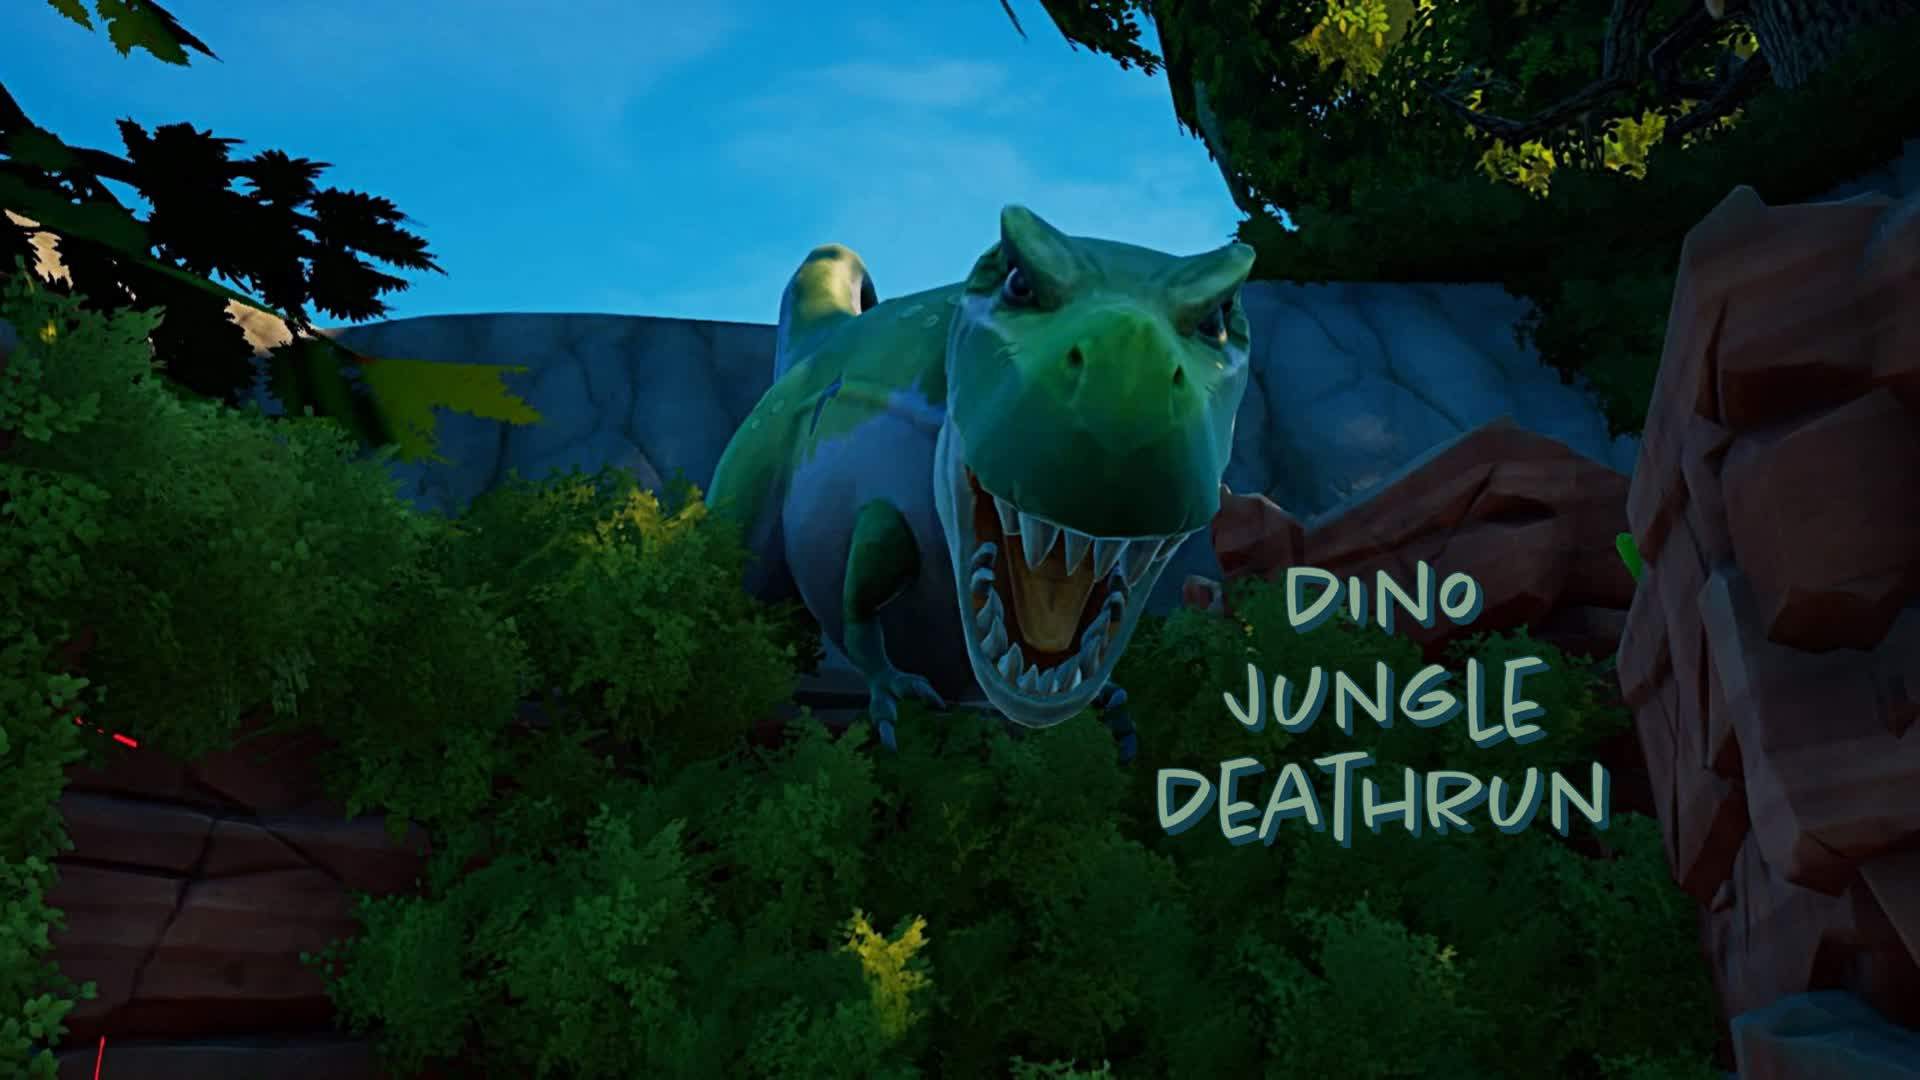 Dino Jungle Deathrun